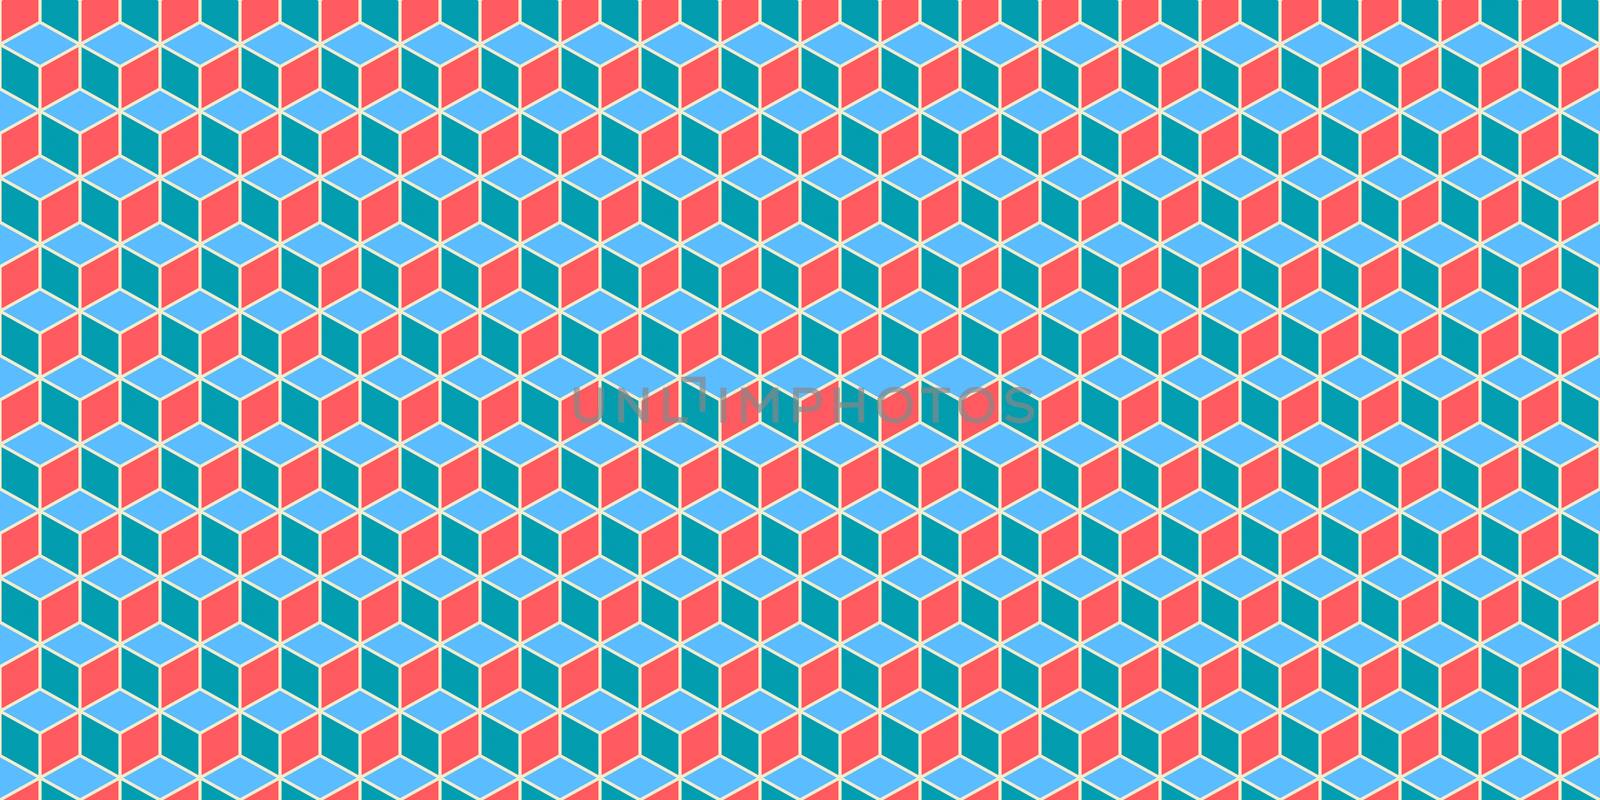 Red Blue Seamless Cube Pattern Background. Isometric Blocks Texture. Geometric 3d Mosaic Backdrop.